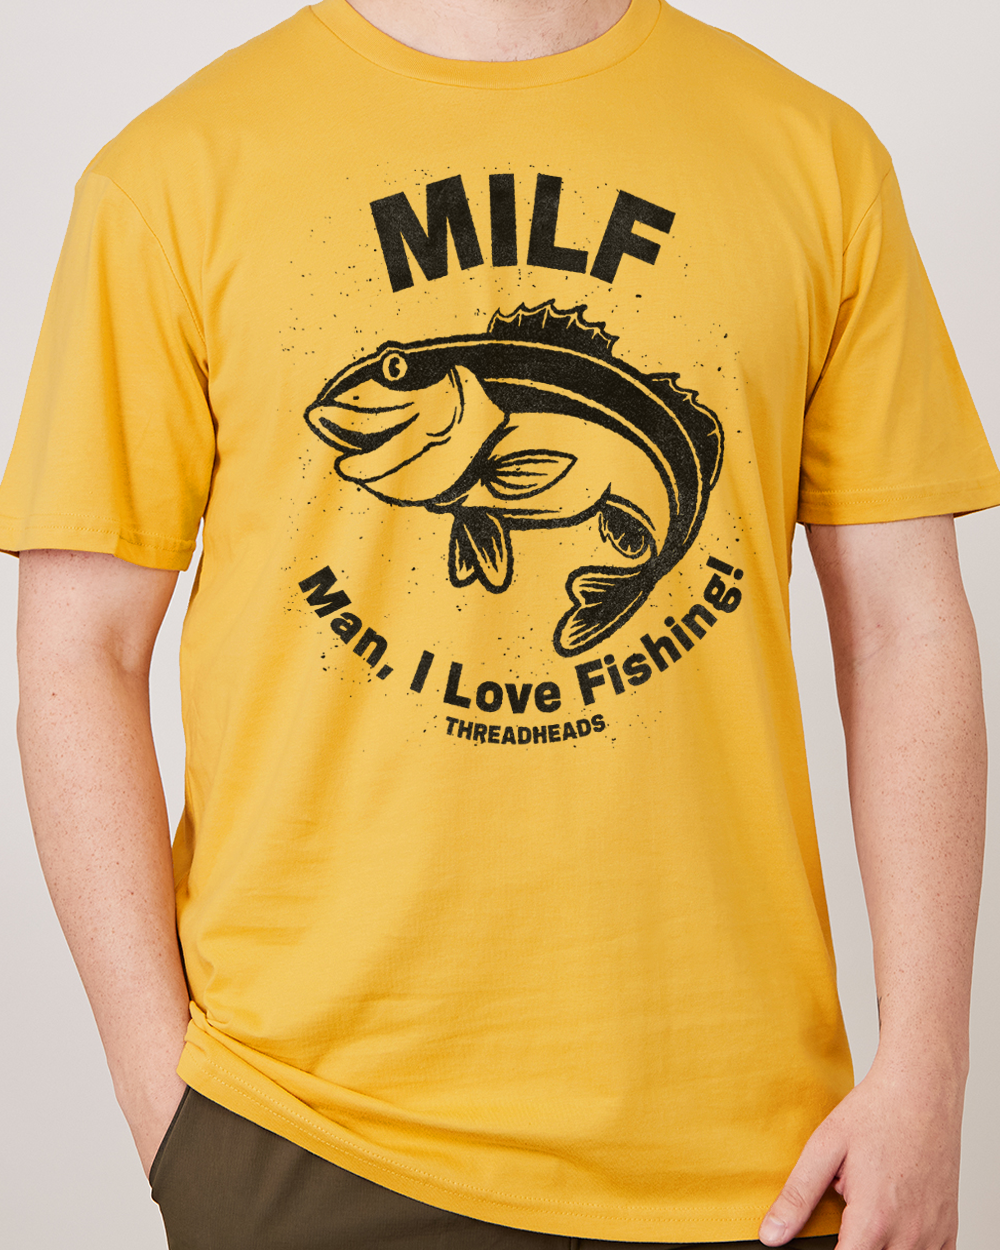 Man I Love Fishing T-Shirt, Funny Aussie T-Shirt Australia